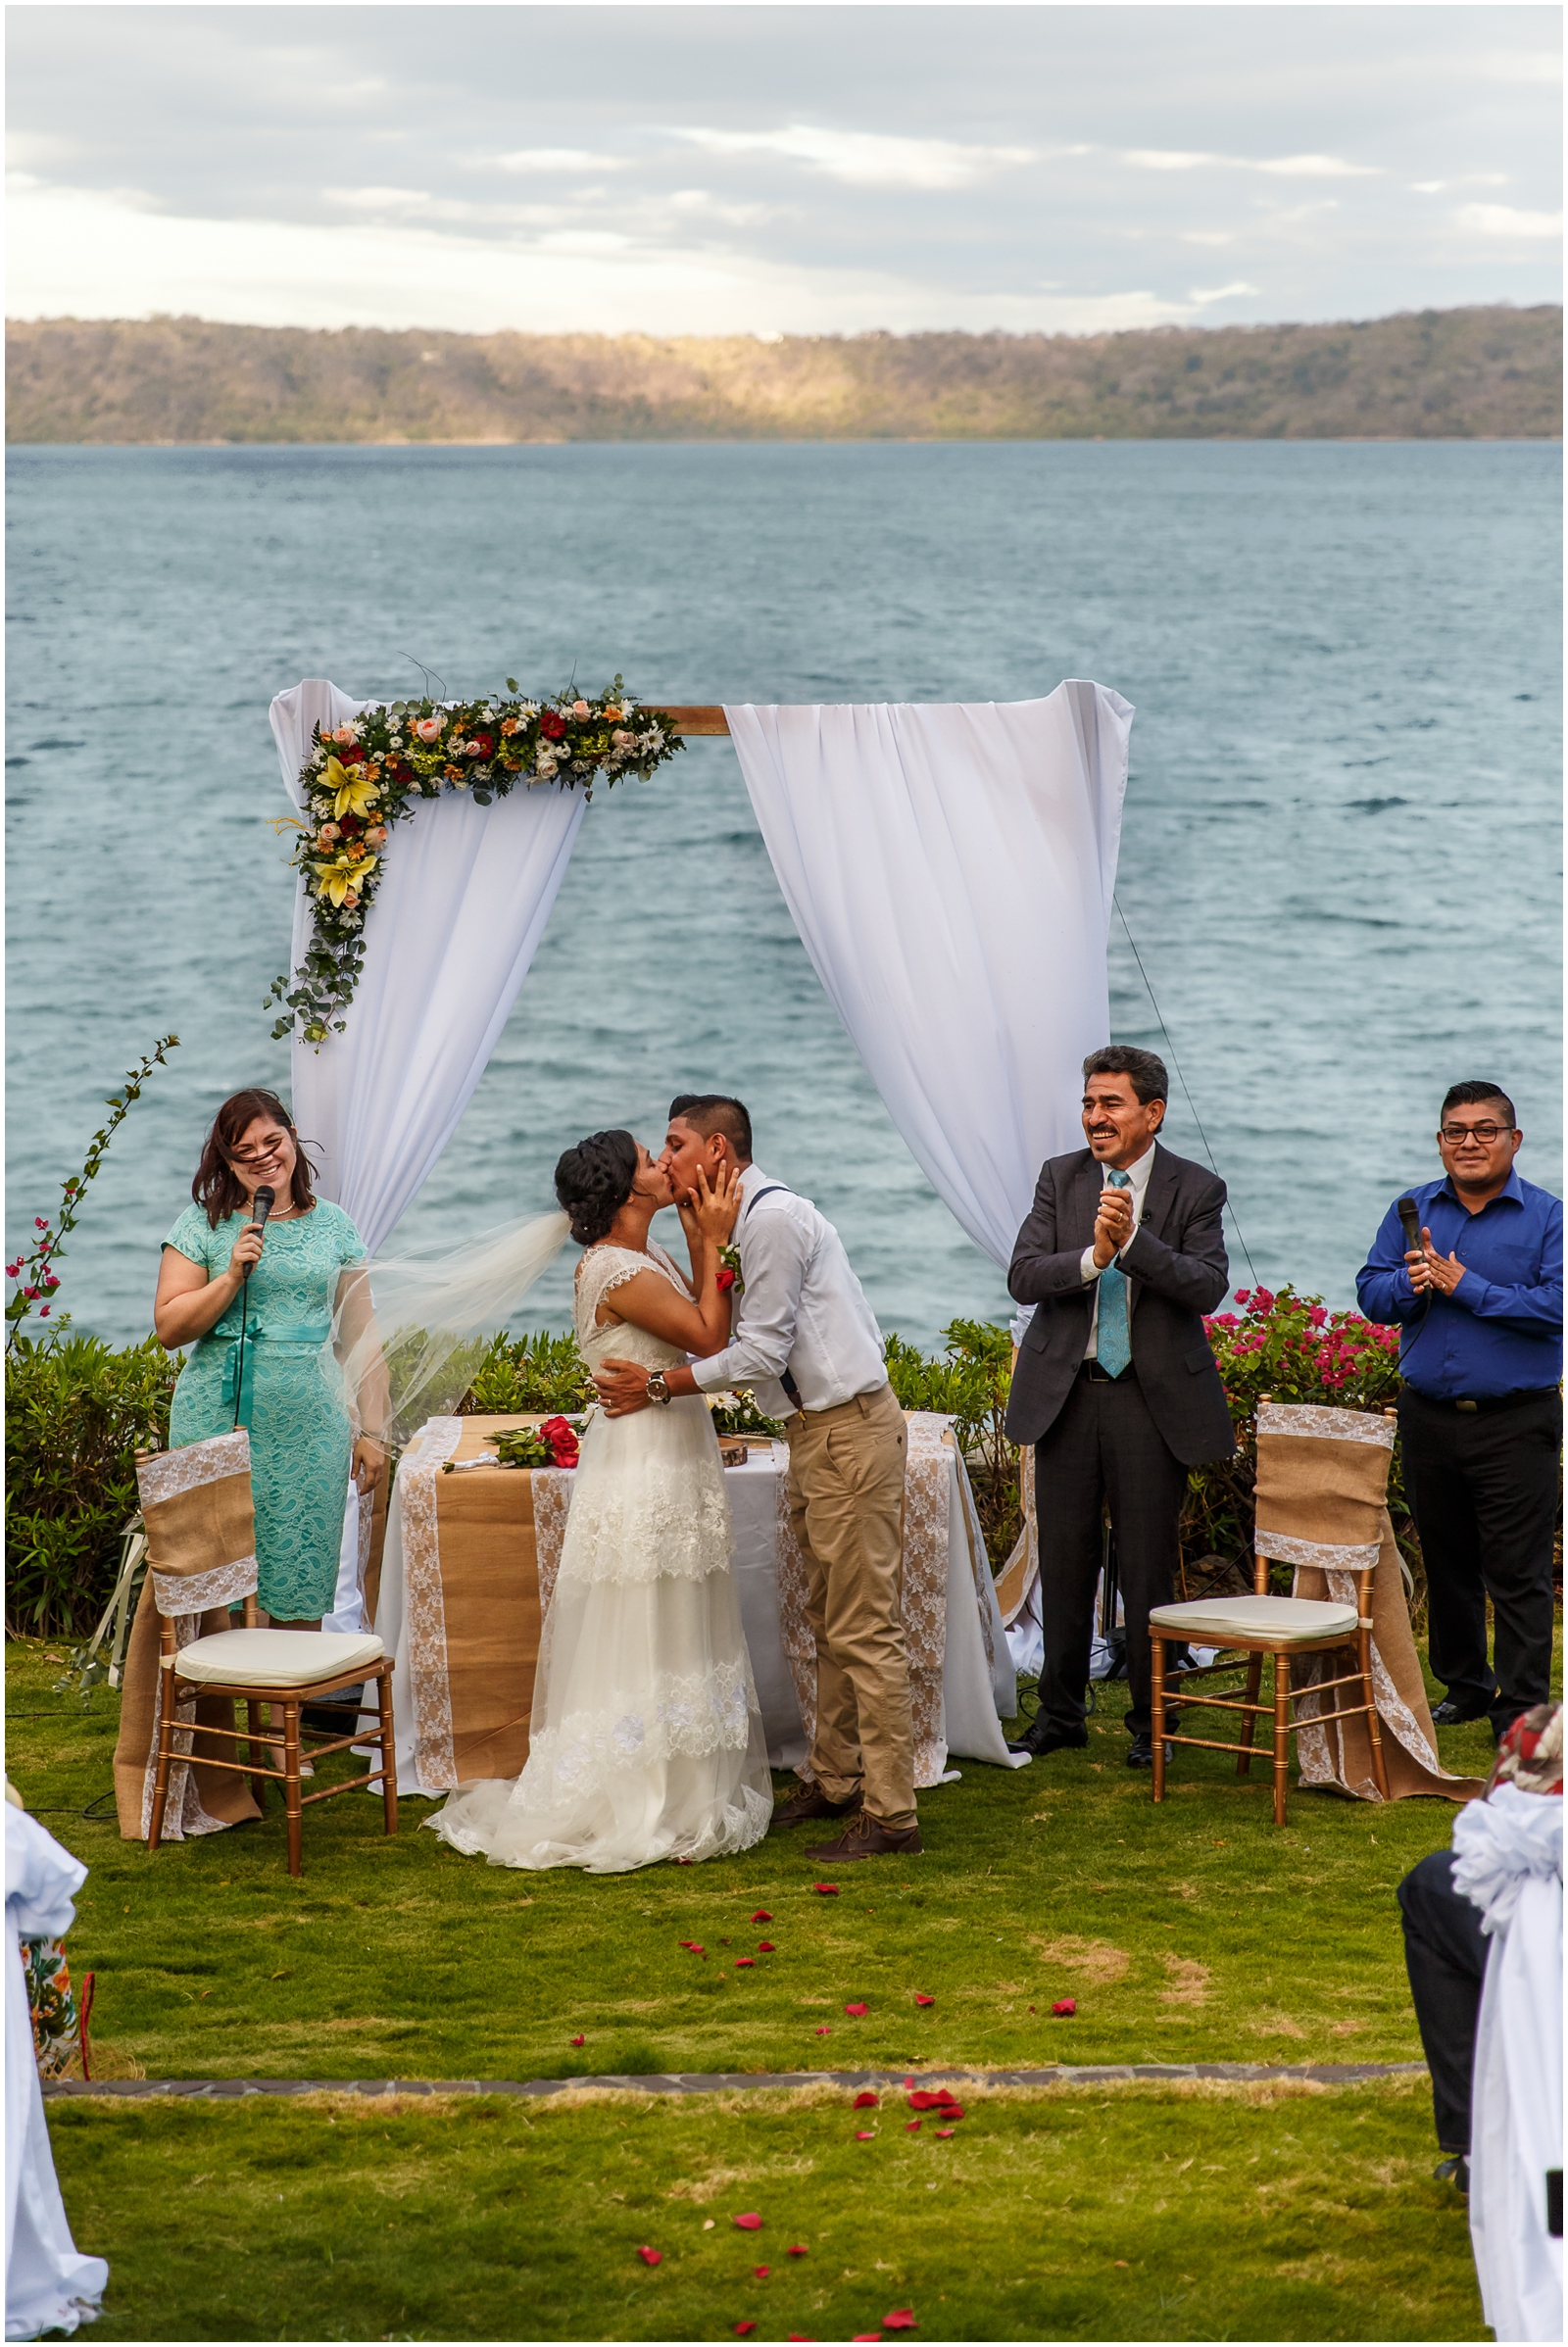 First kiss at an epic Nicaraguan intimate wedding.